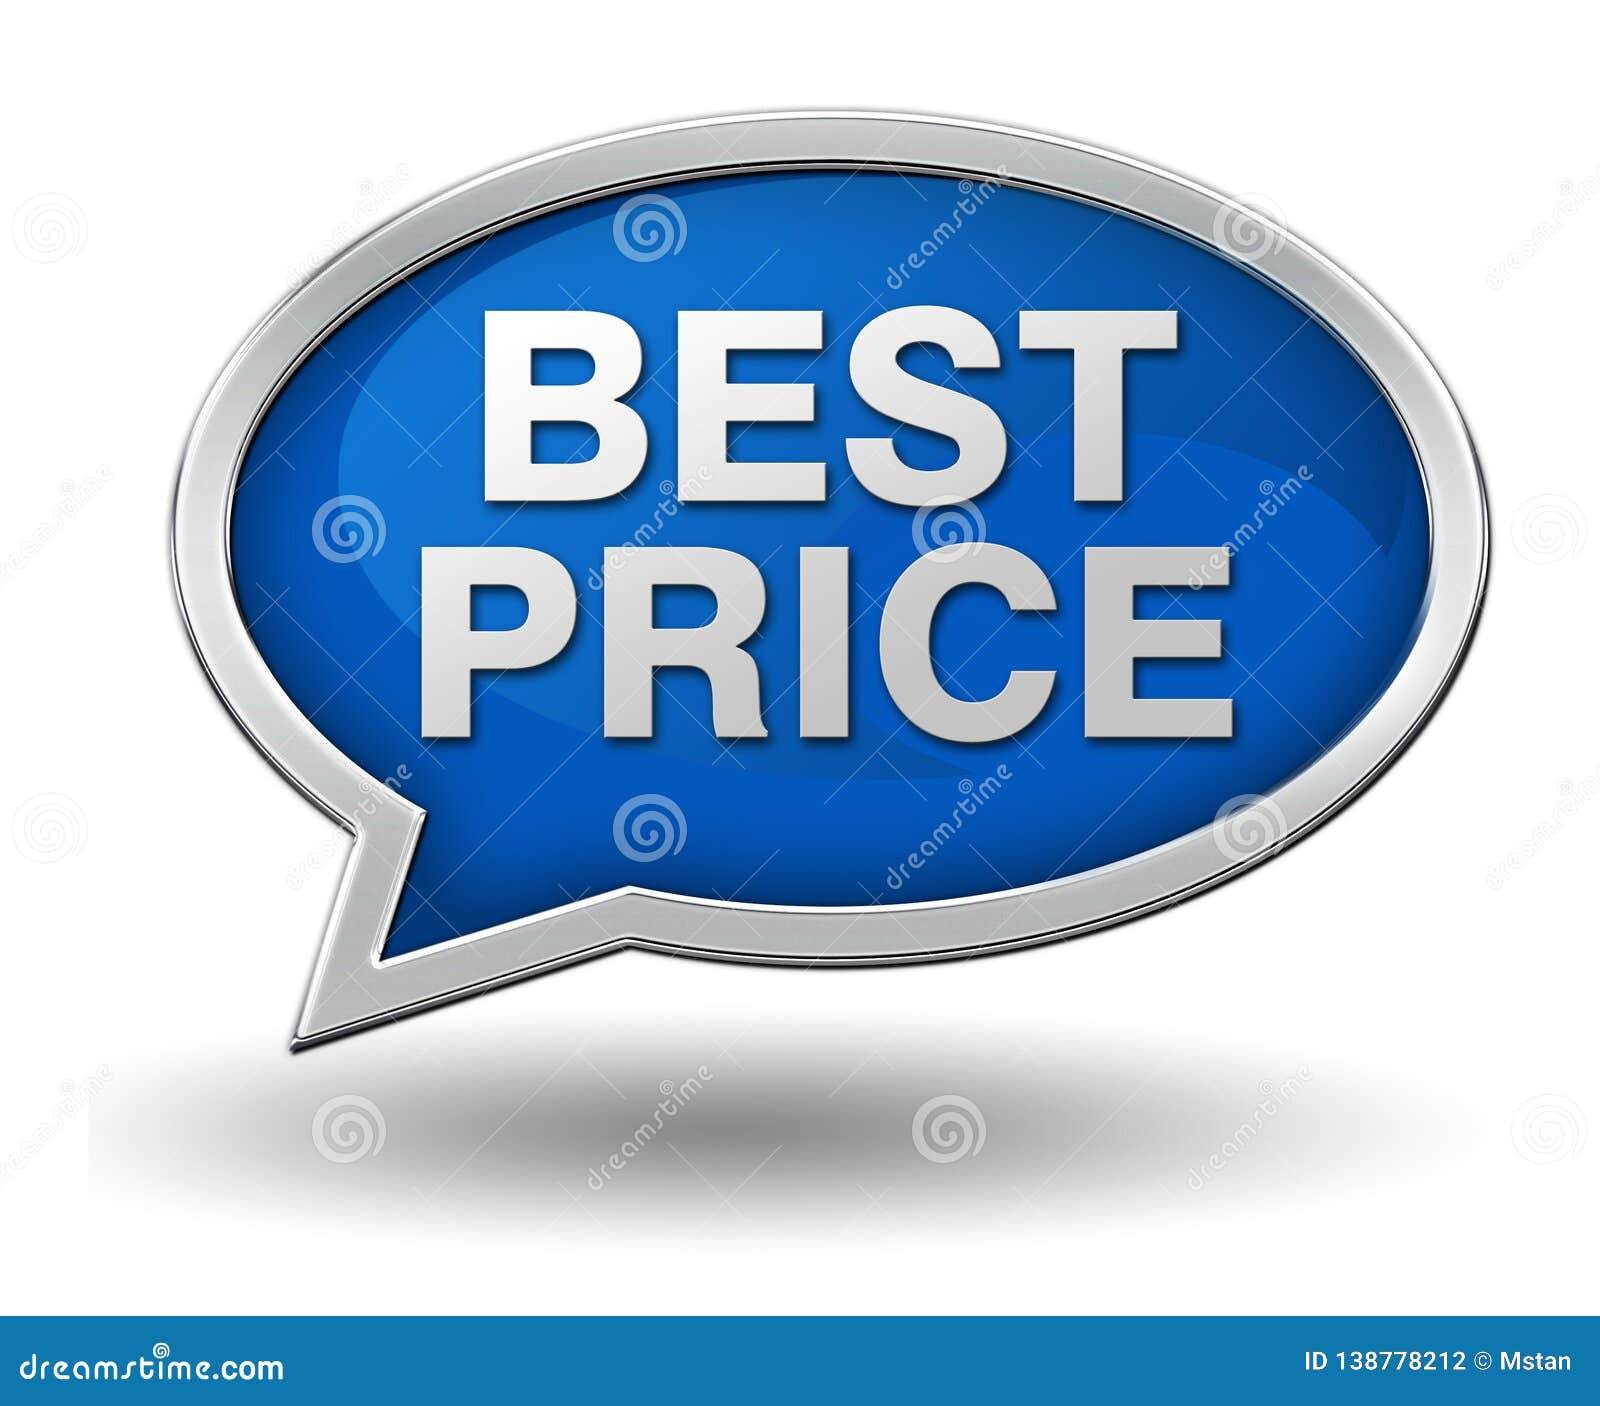 Best Price Badge Concept 3d Illustration Stock Illustration ...